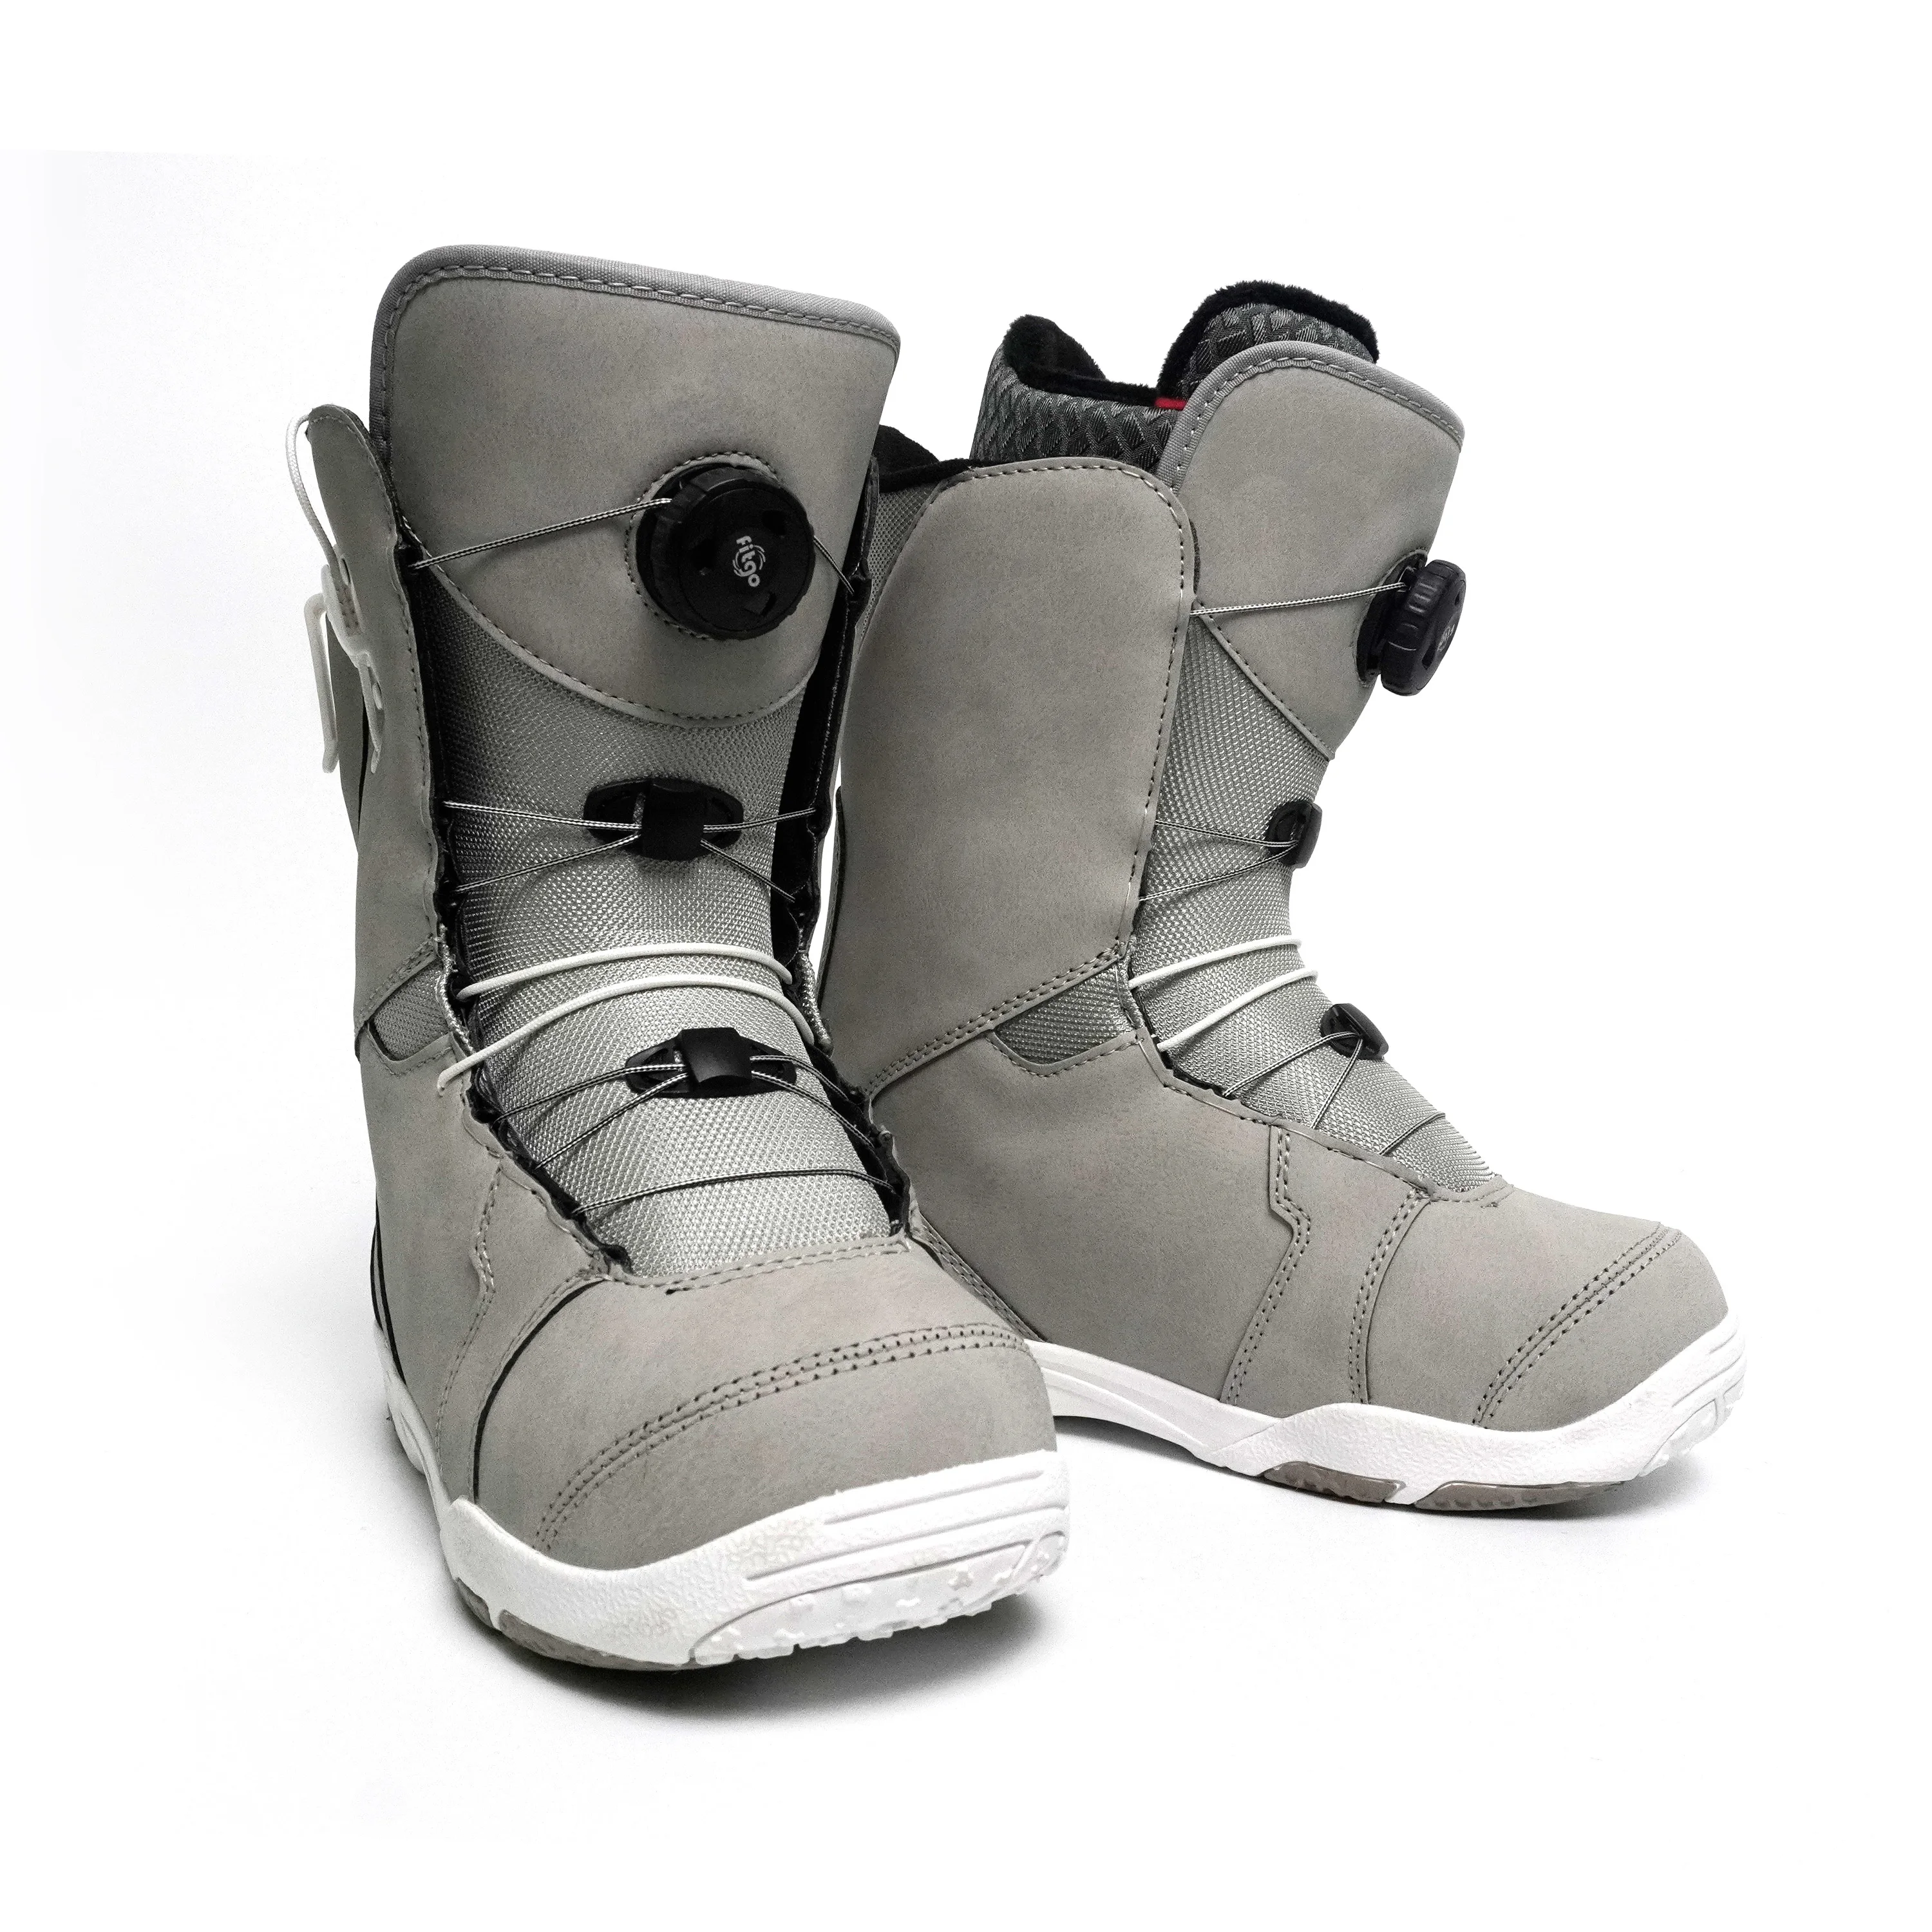 Wholesales הקמעונאי באיכות גבוהה סנובורד מחייב מגפי שלג נעלי סנובורד מגפי גבר - 1